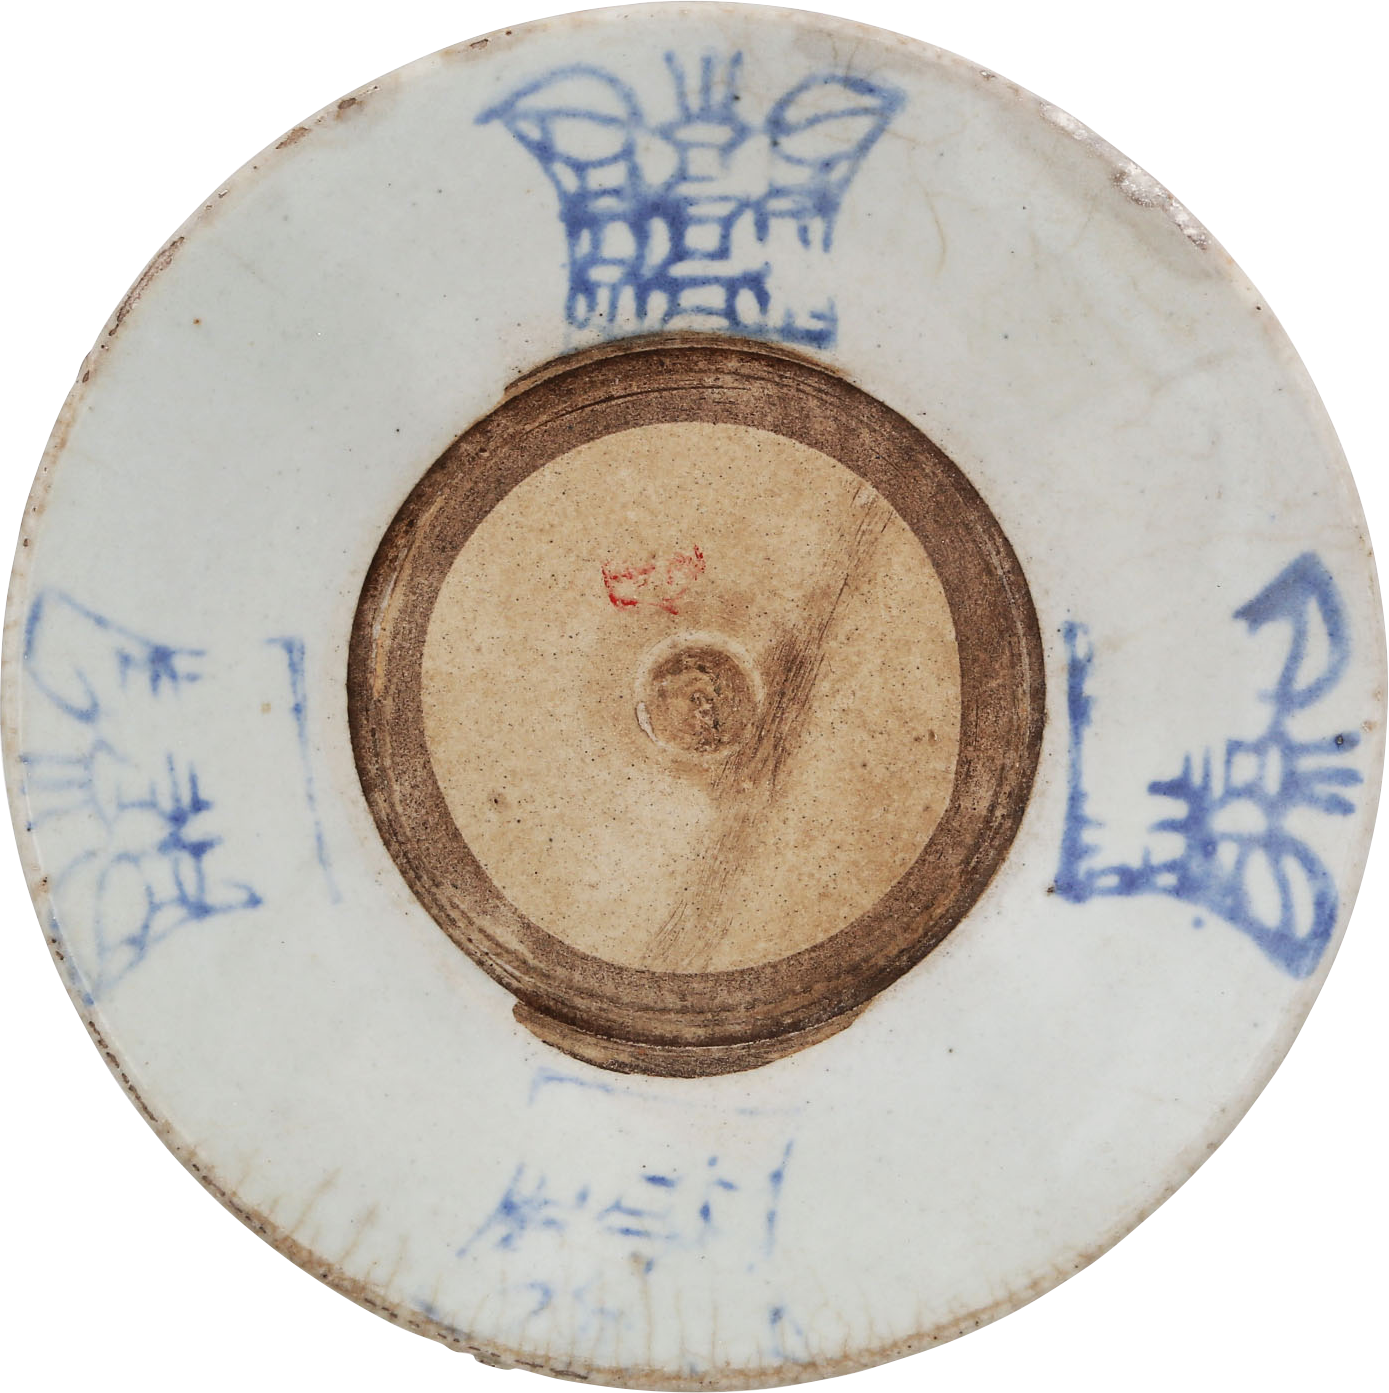 MING CHINESE BOWL 1368-1644 - Fagan Arms